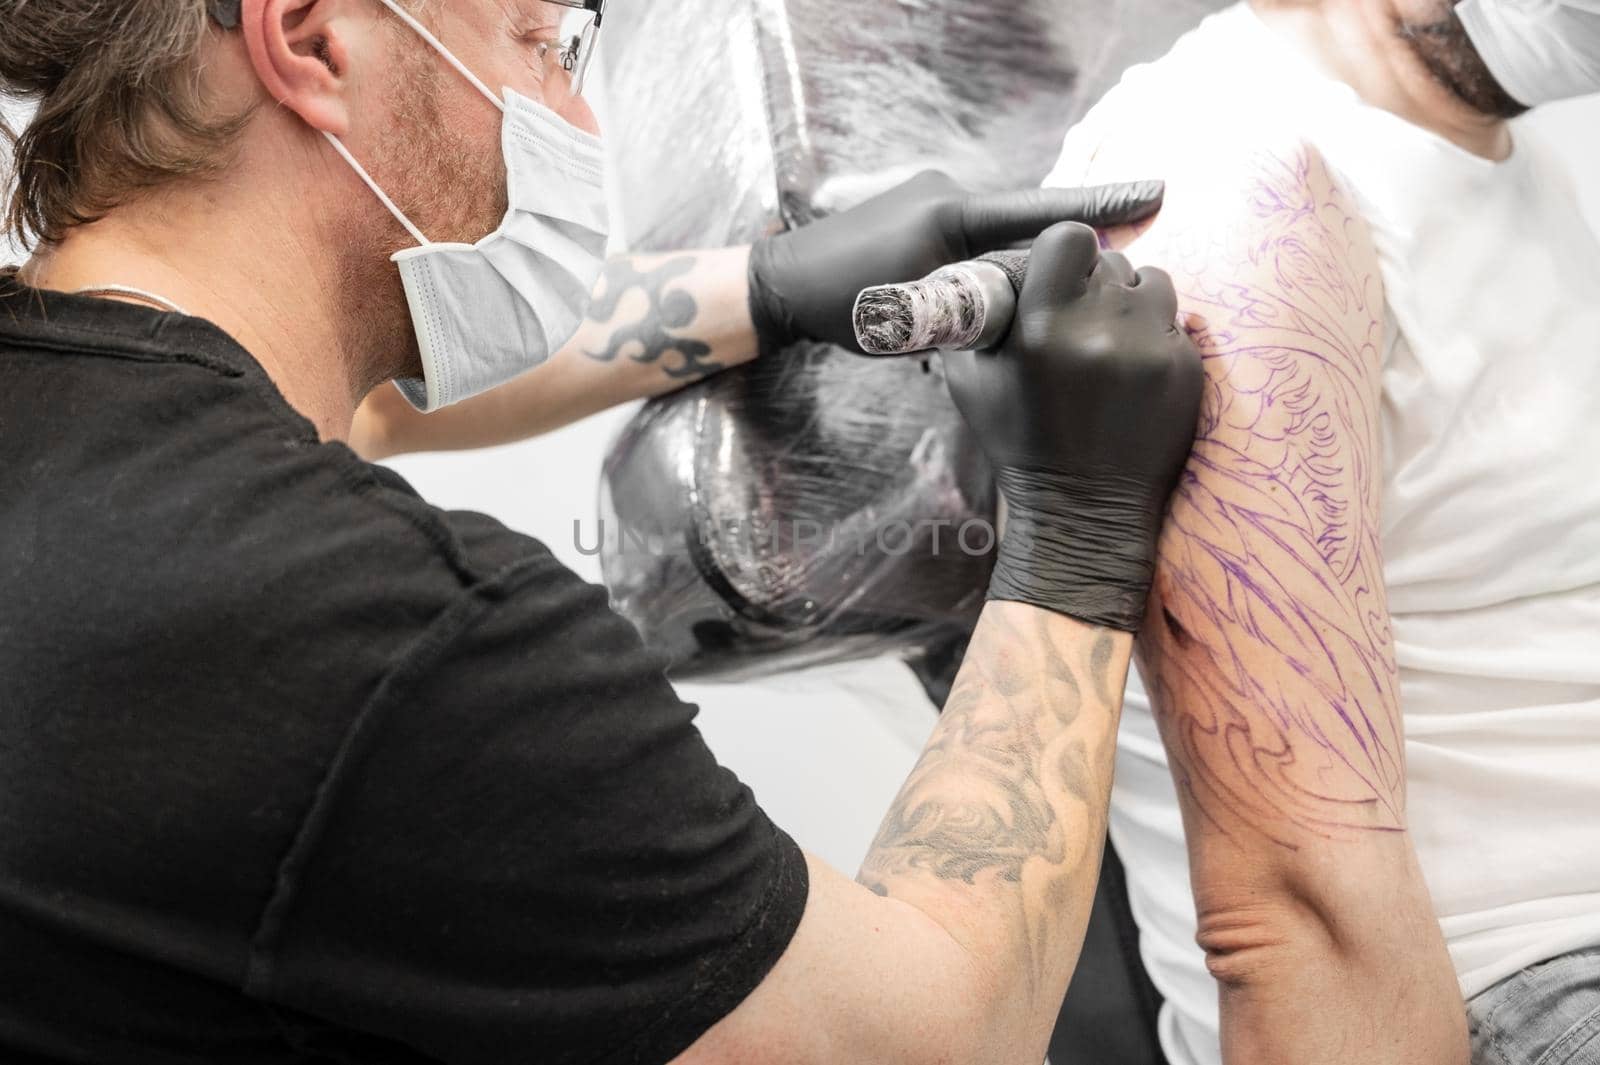 Tattoo artist making tattoo at the studio by HERRAEZ